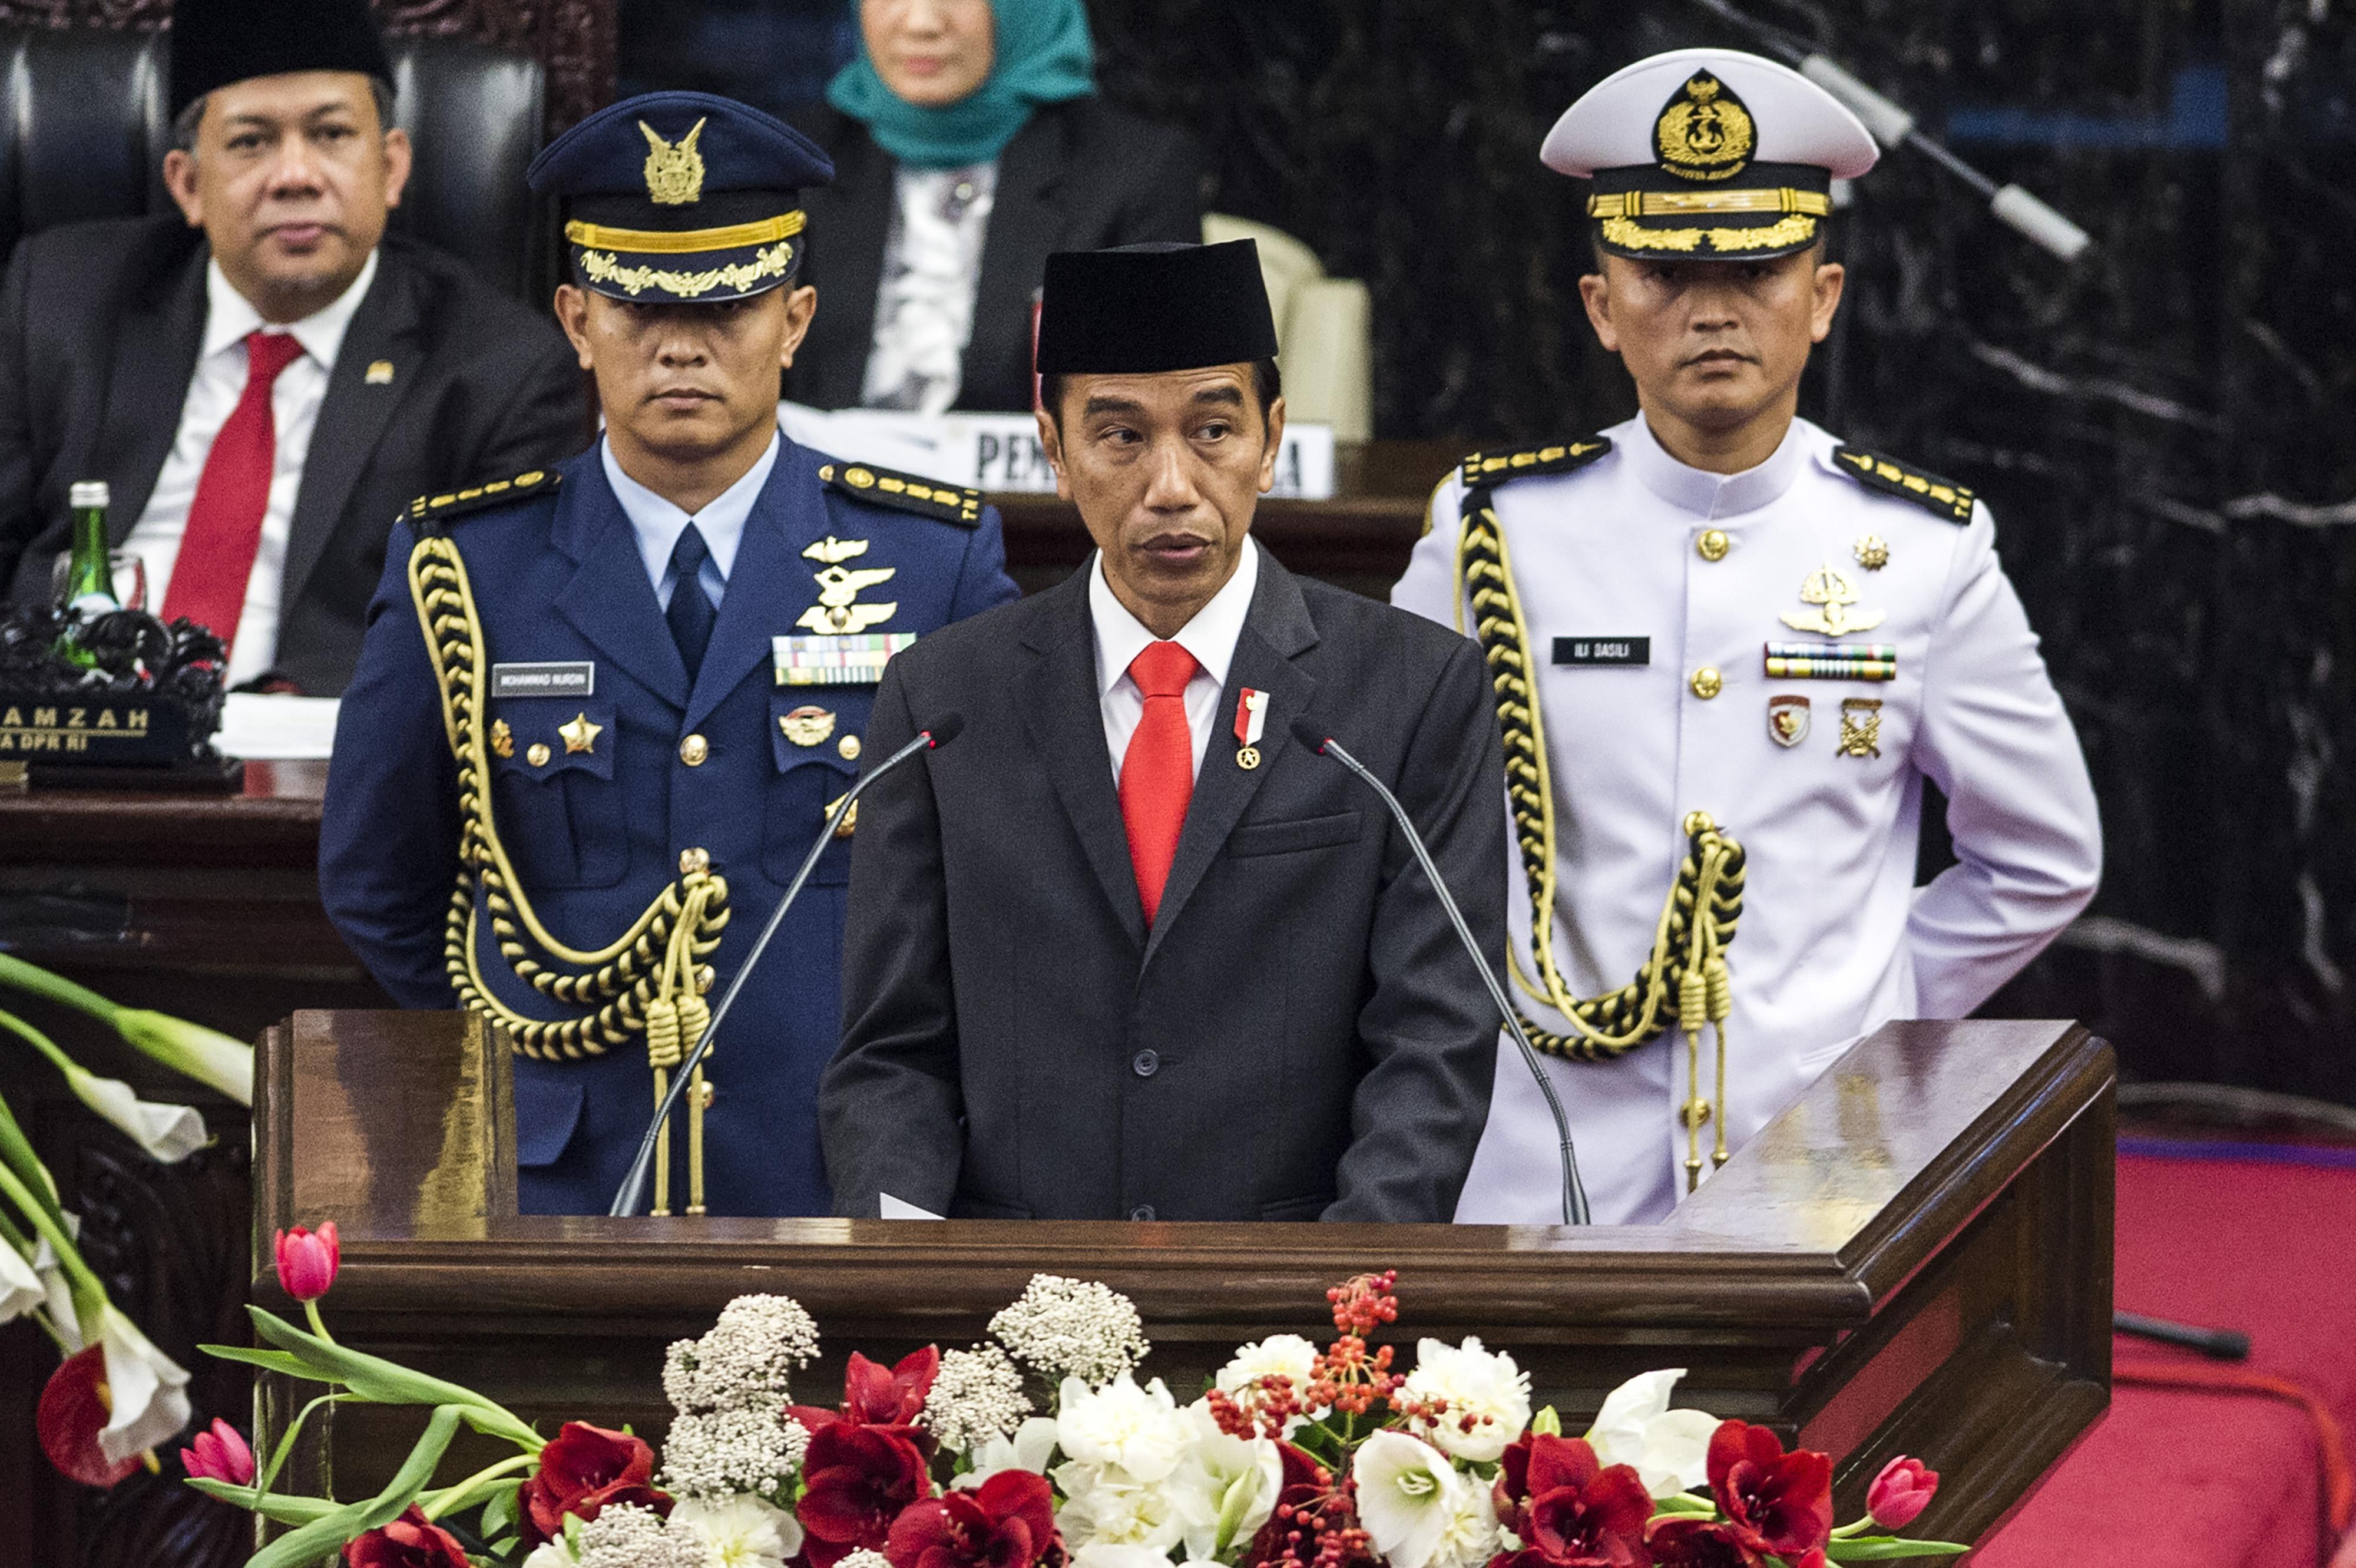 Ini Alasan Jokowi Luncurkan Perpres Percepatan Kemudahan Berusaha